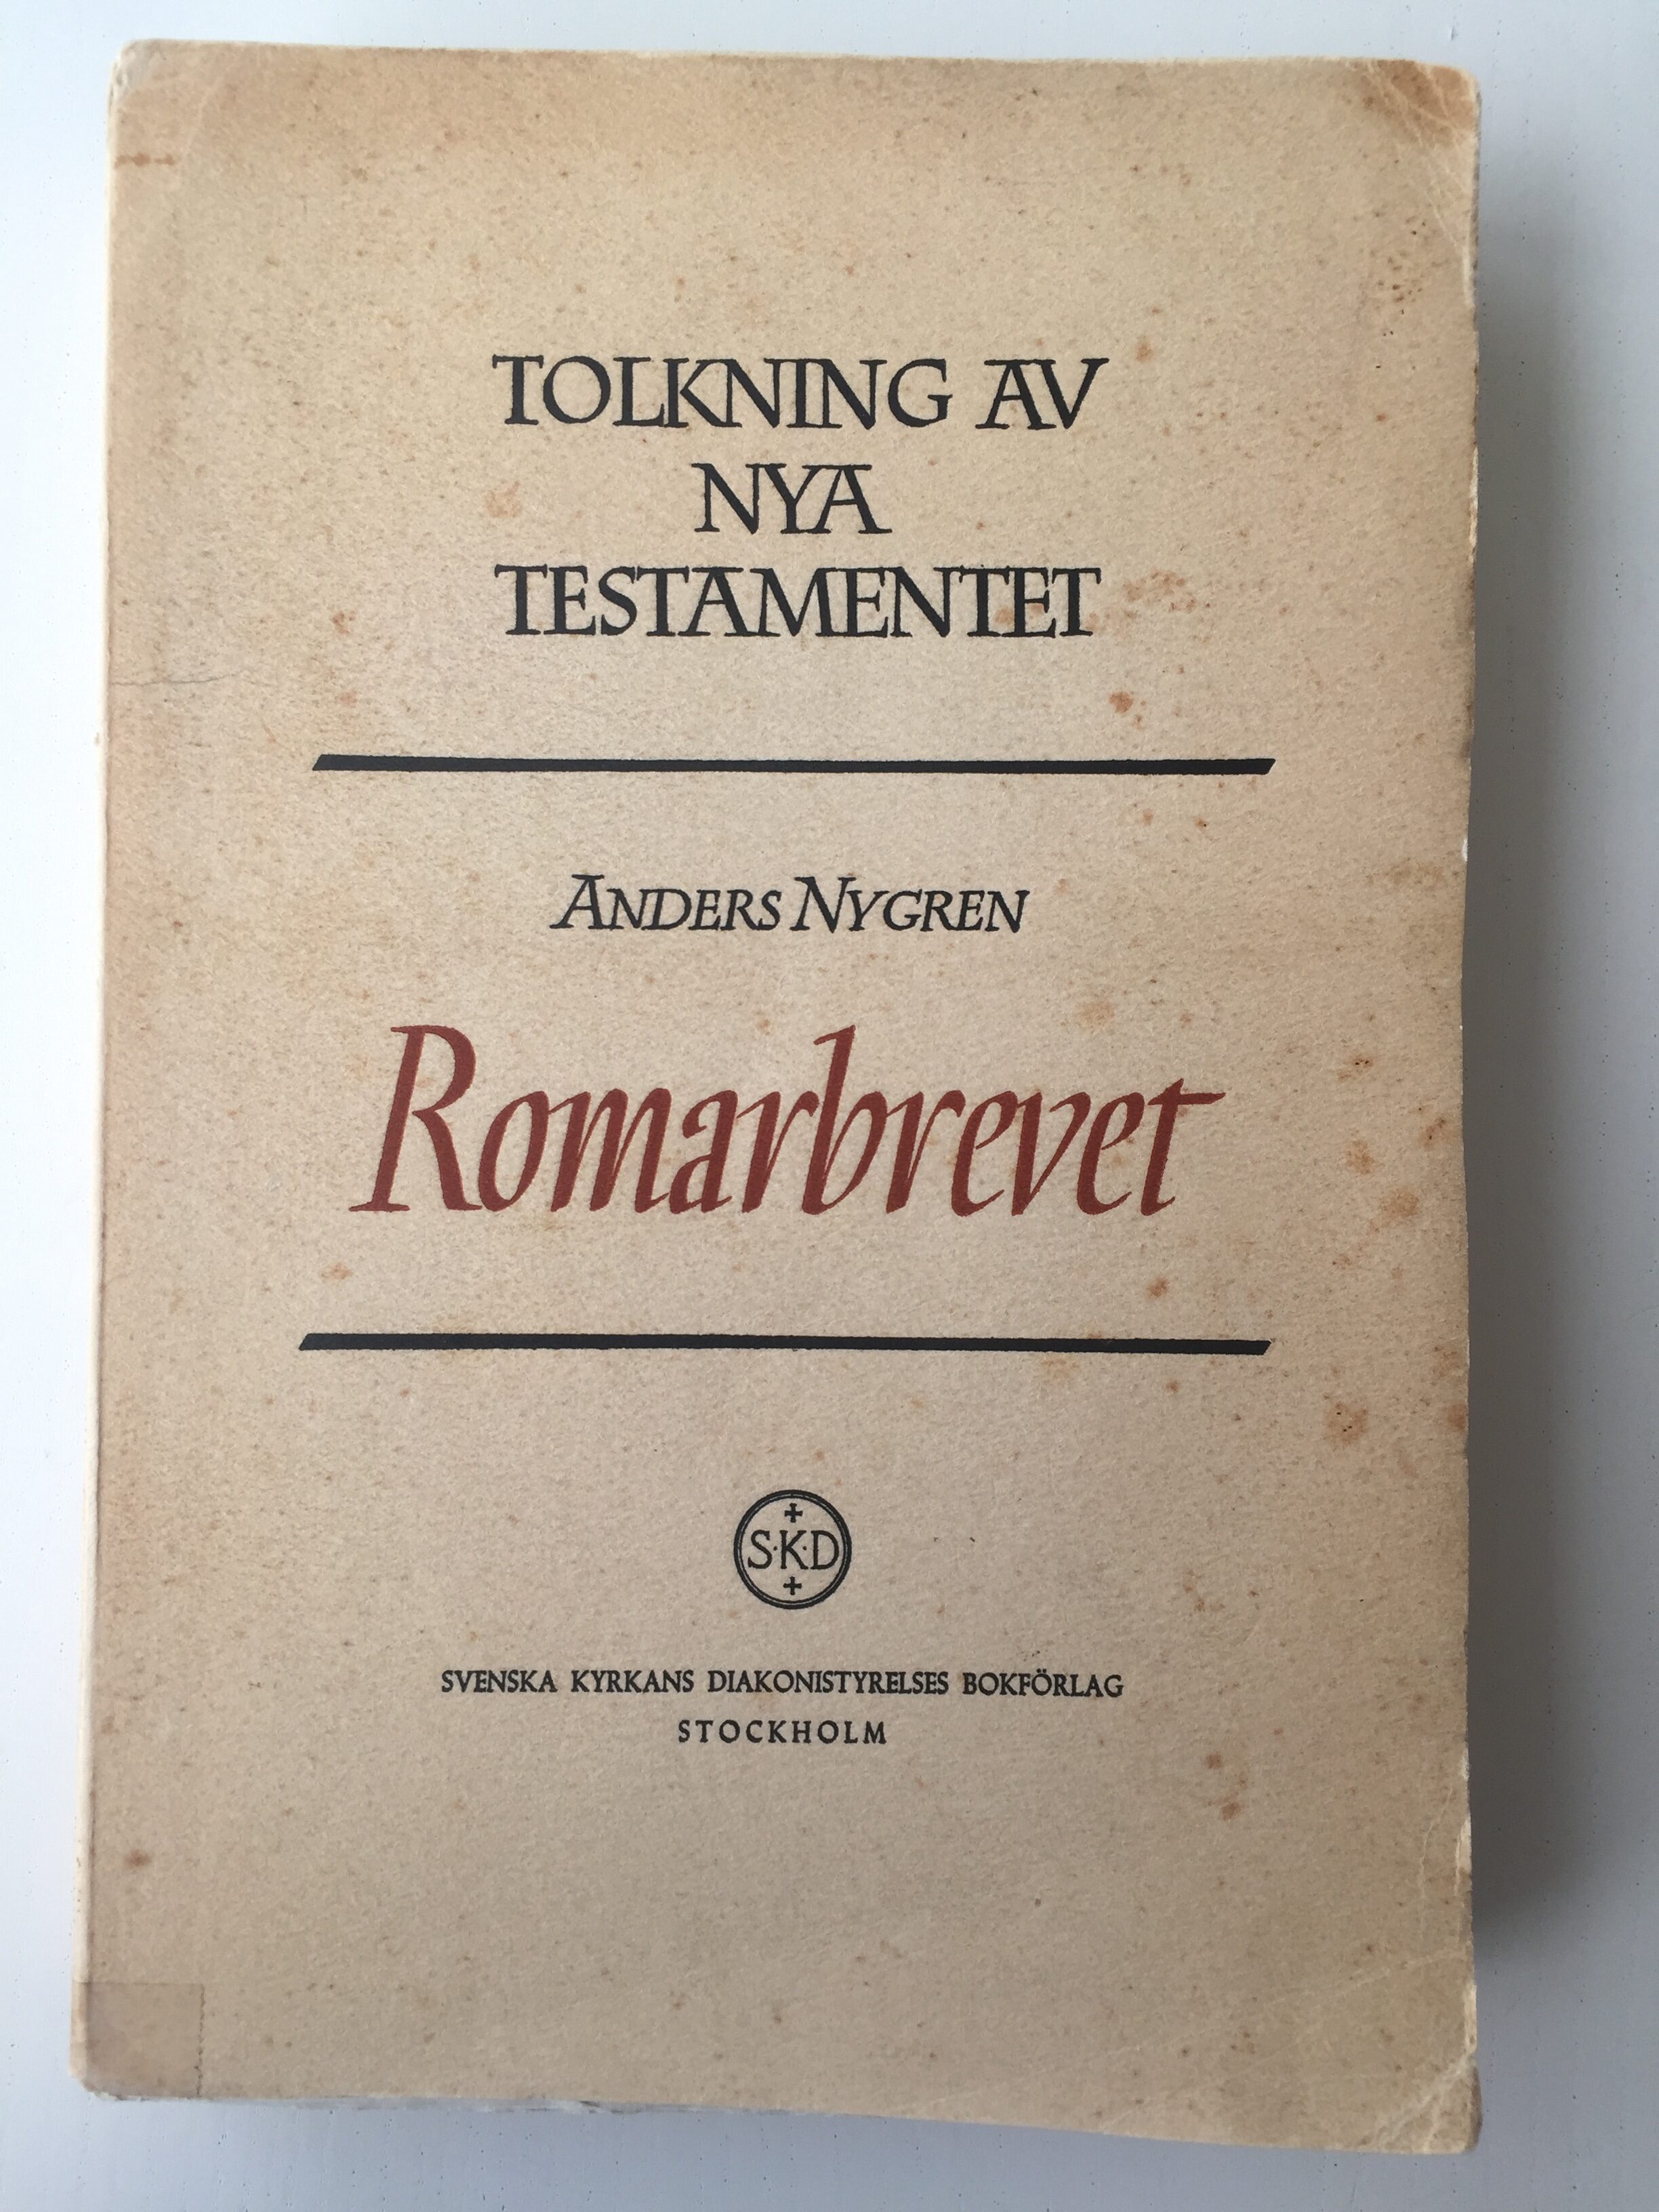 Køb "Tolkning av Nya Testamentet 1944" (forside)